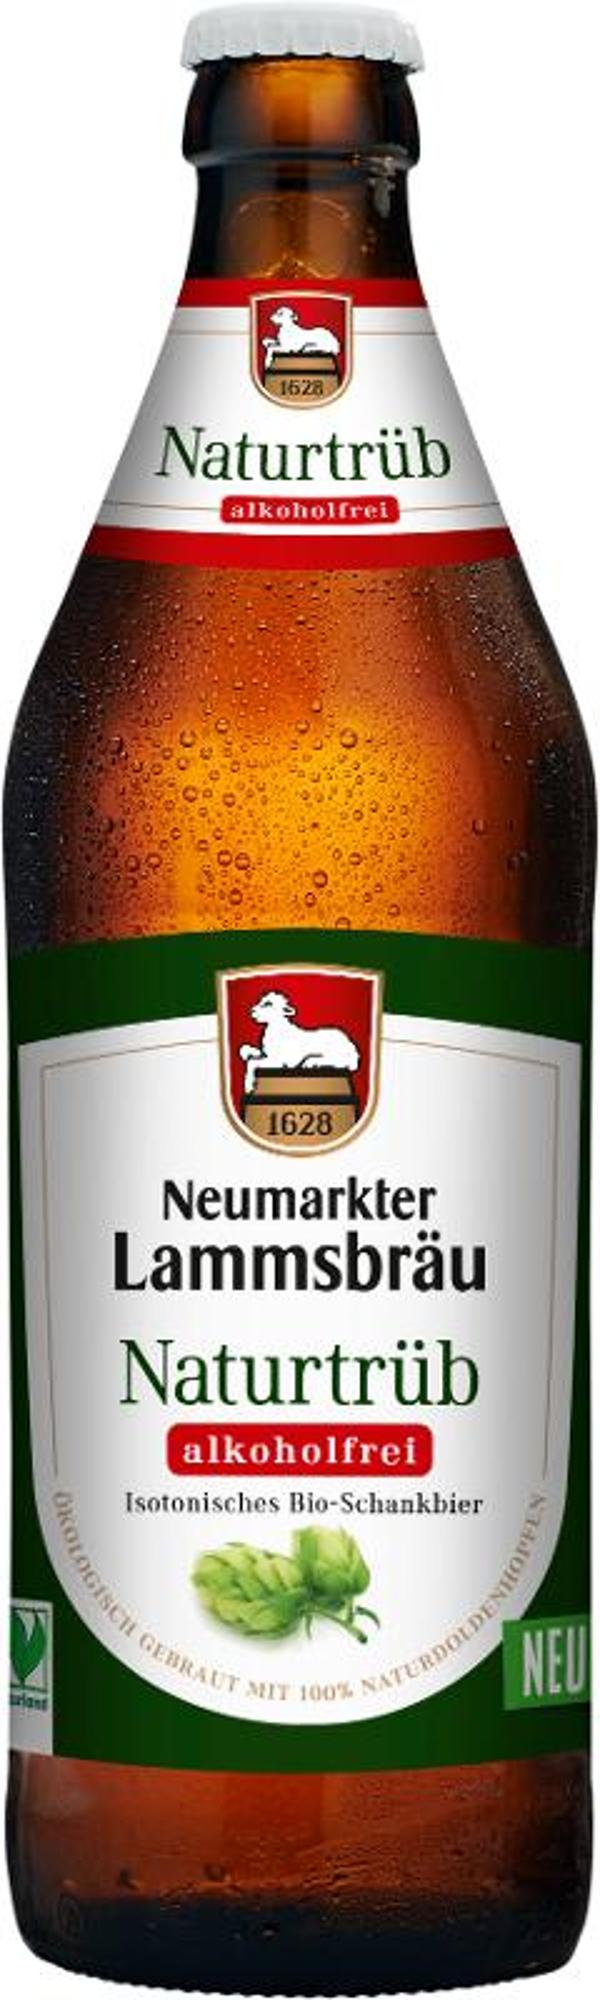 Produktfoto zu VPE Lammsbräu Naturtrüb alkoholfrei 10x0,5l Neumarkter Lammsbräu